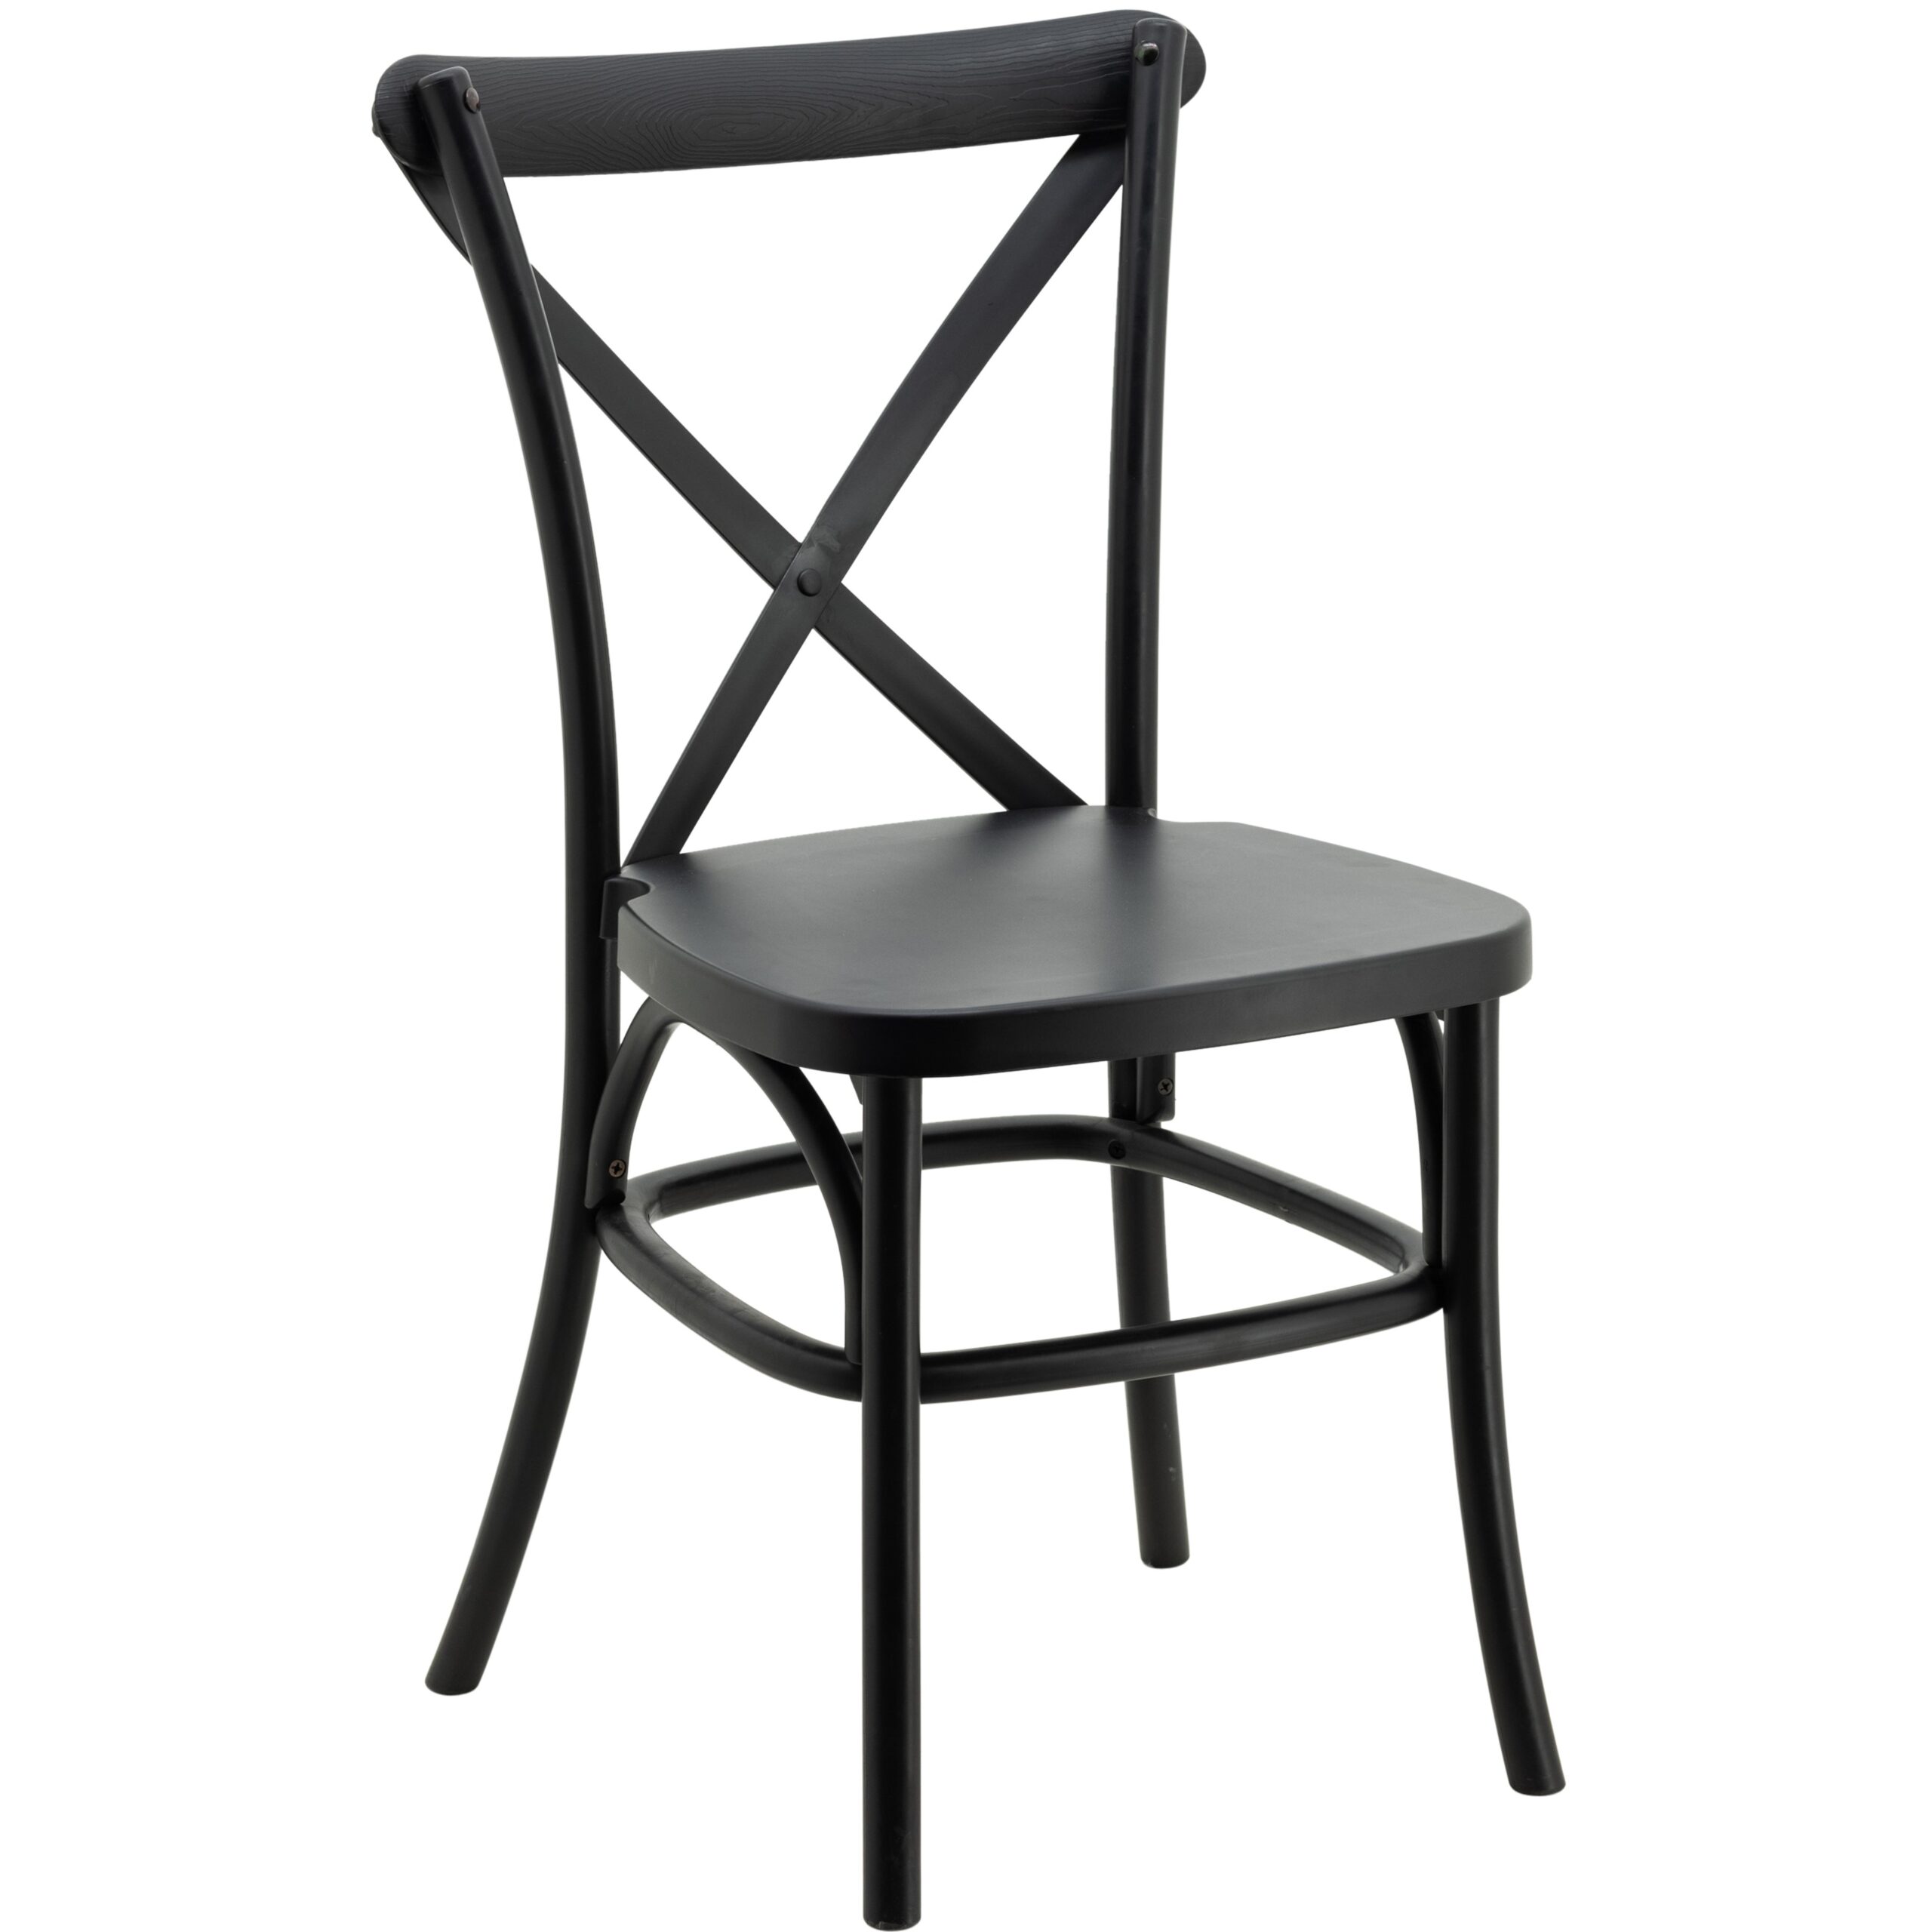 Resin Cross Back Chair in Black